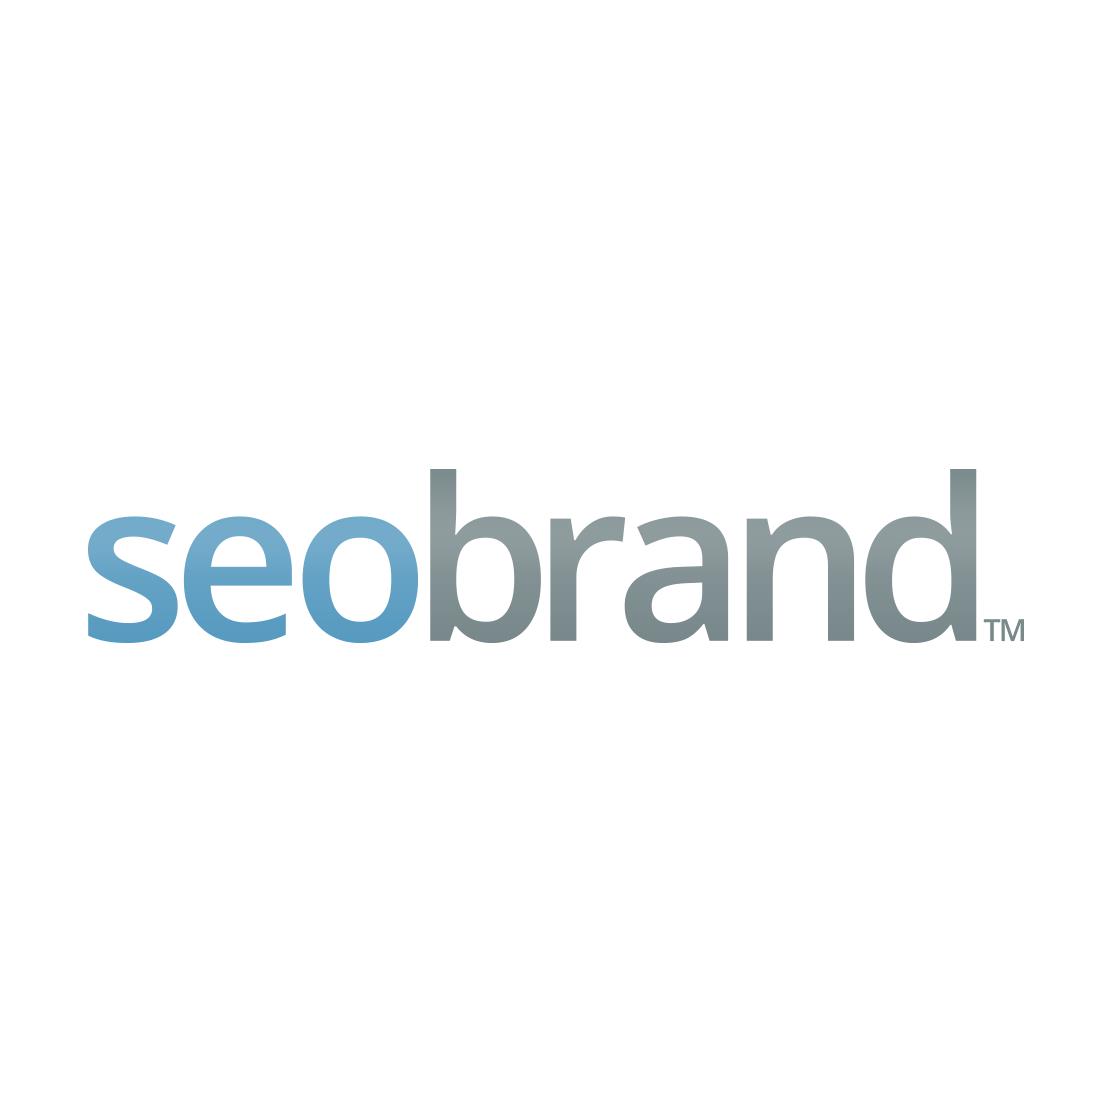 Top Real Estate SEO Firm Logo: SEO Brand